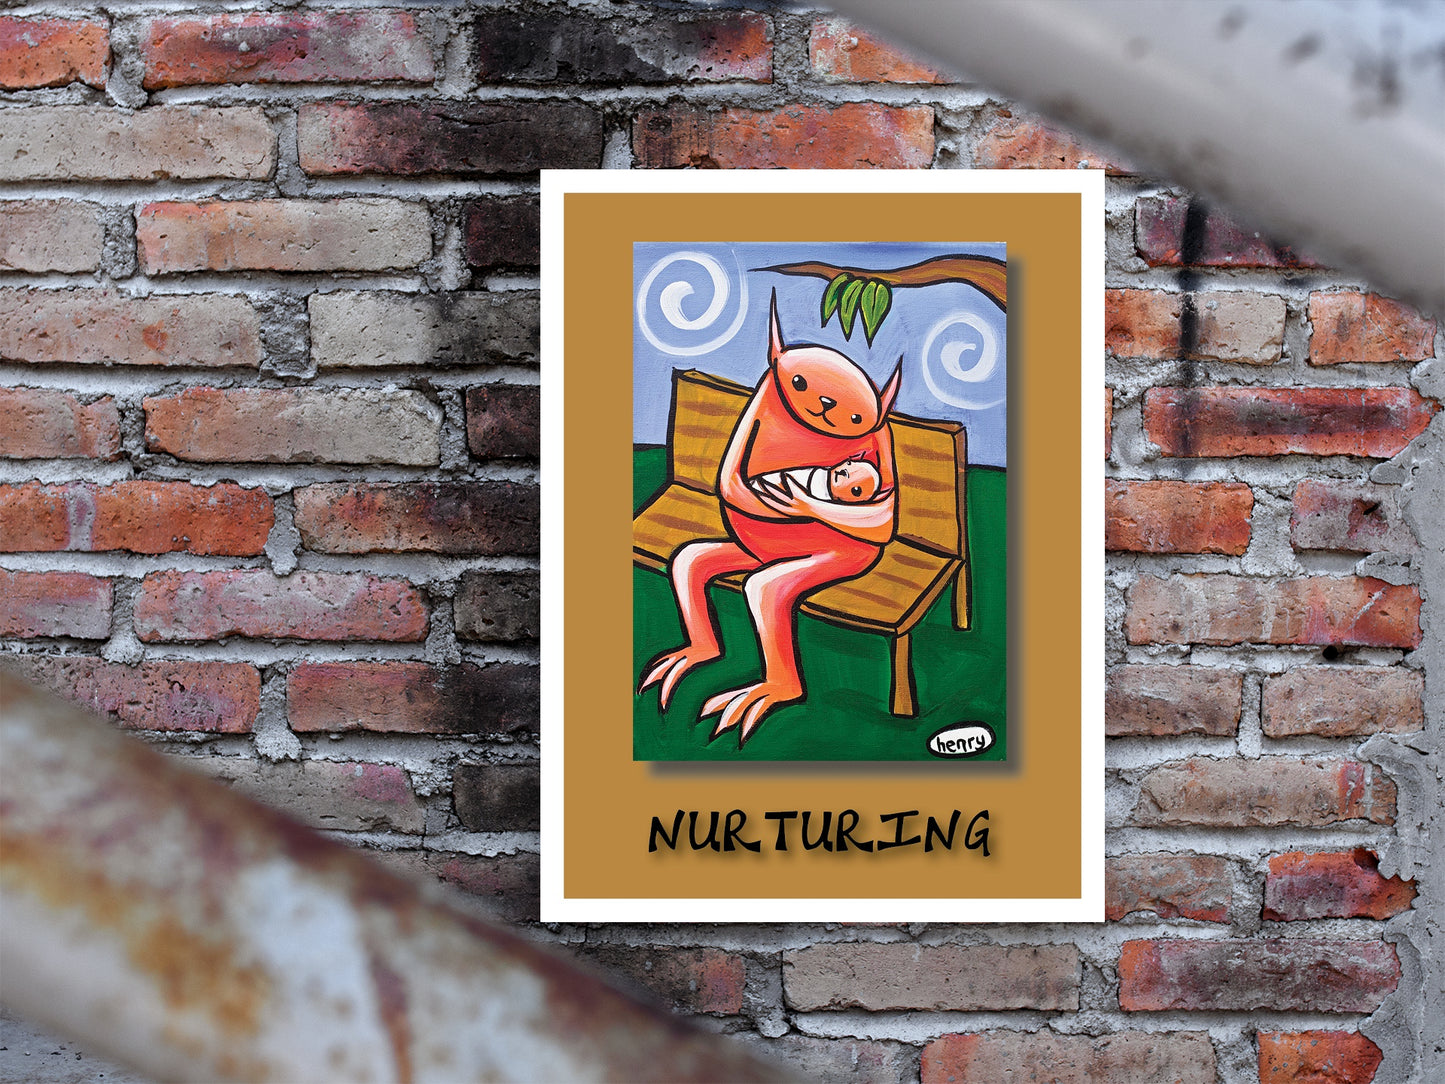 Nurturing - A Radical Abundance Poster